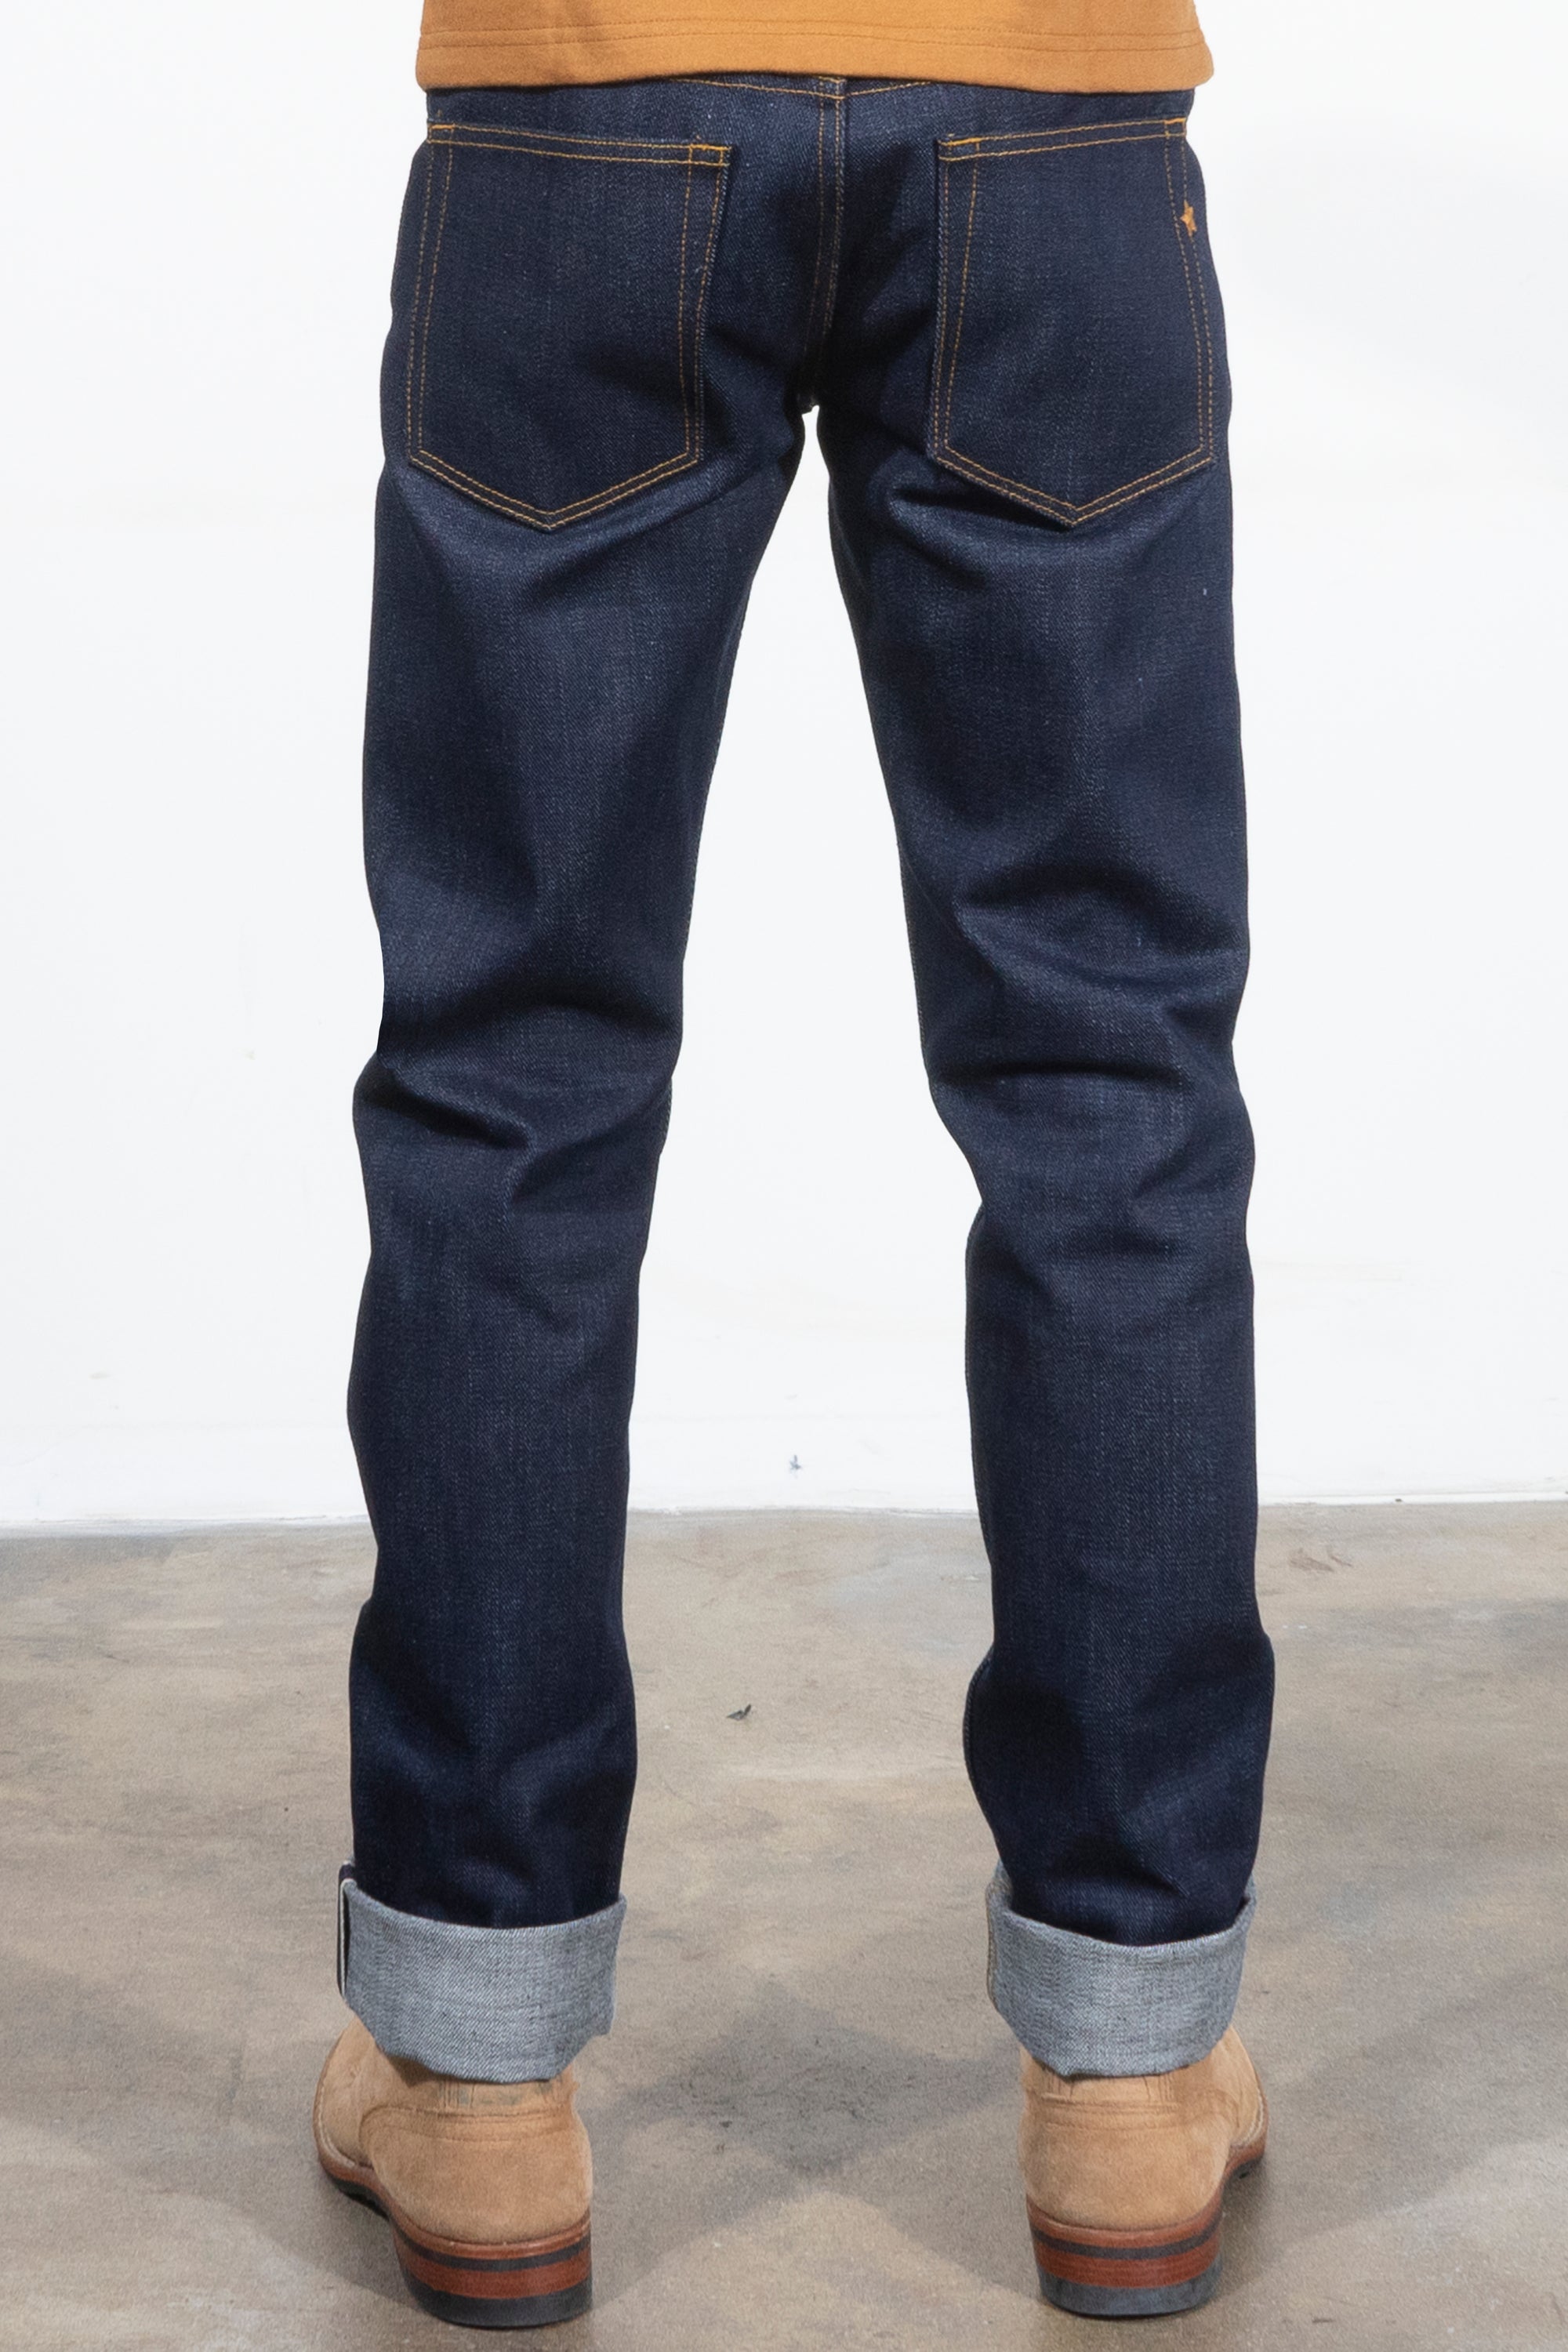 New Brave Star Selvage True Straight Size 34 Raw Denim Jeans